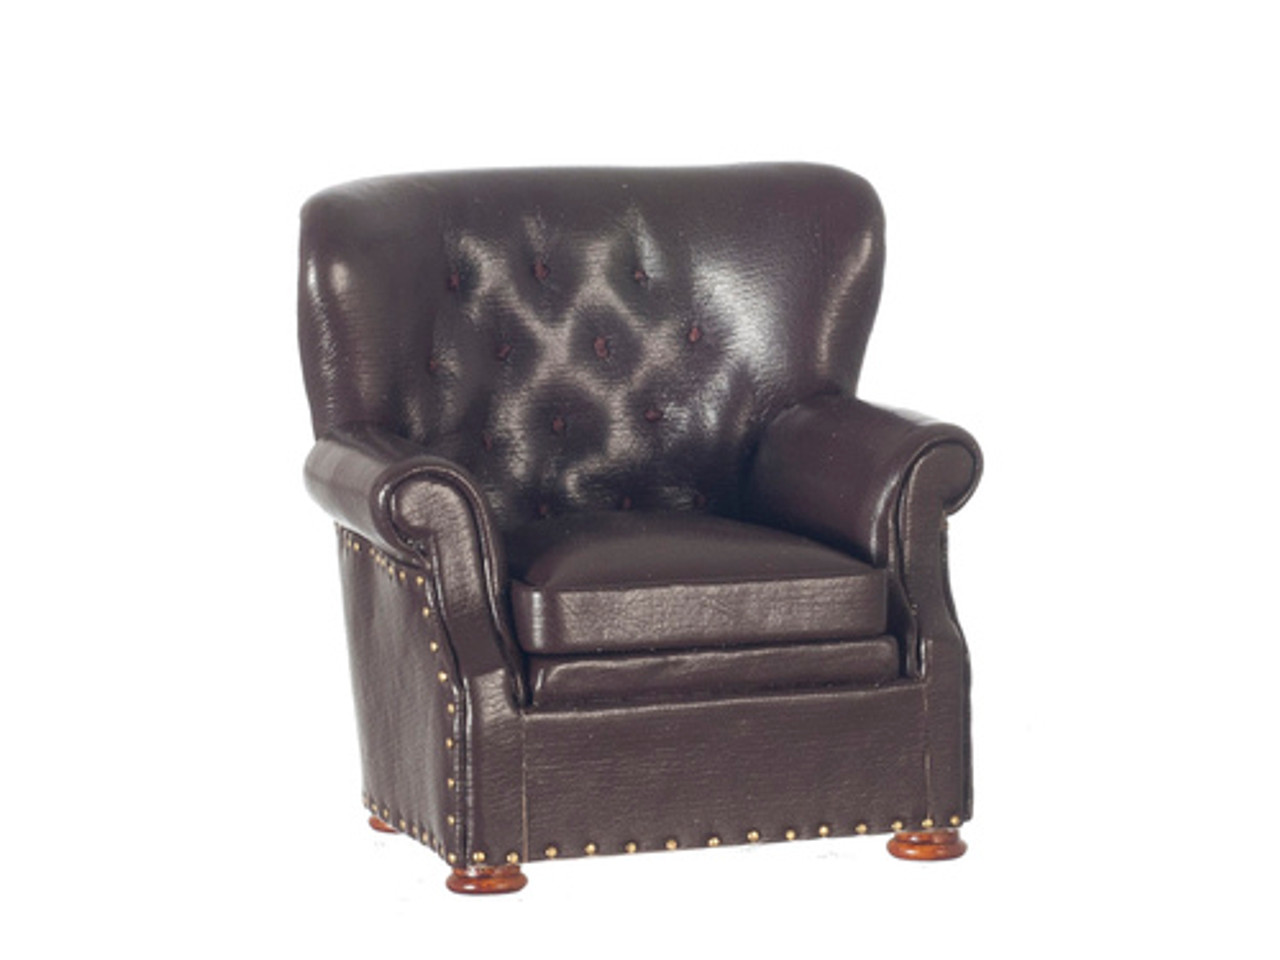 Churchchill Chair - Brown Leather